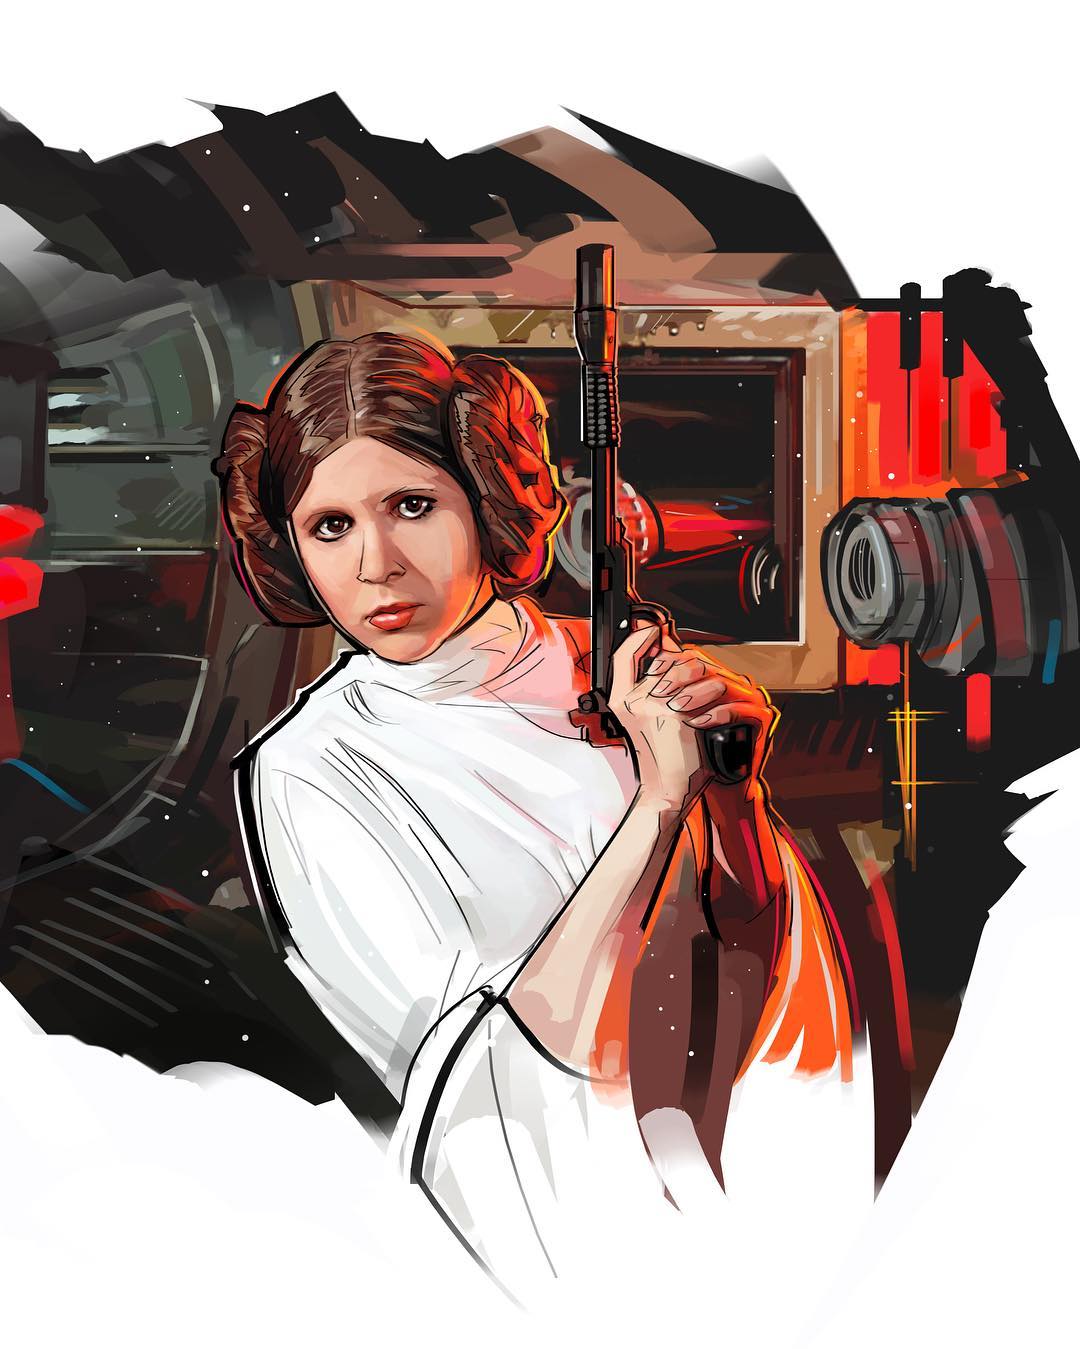 Princess Leia with blaster on Rebel blockade runner.